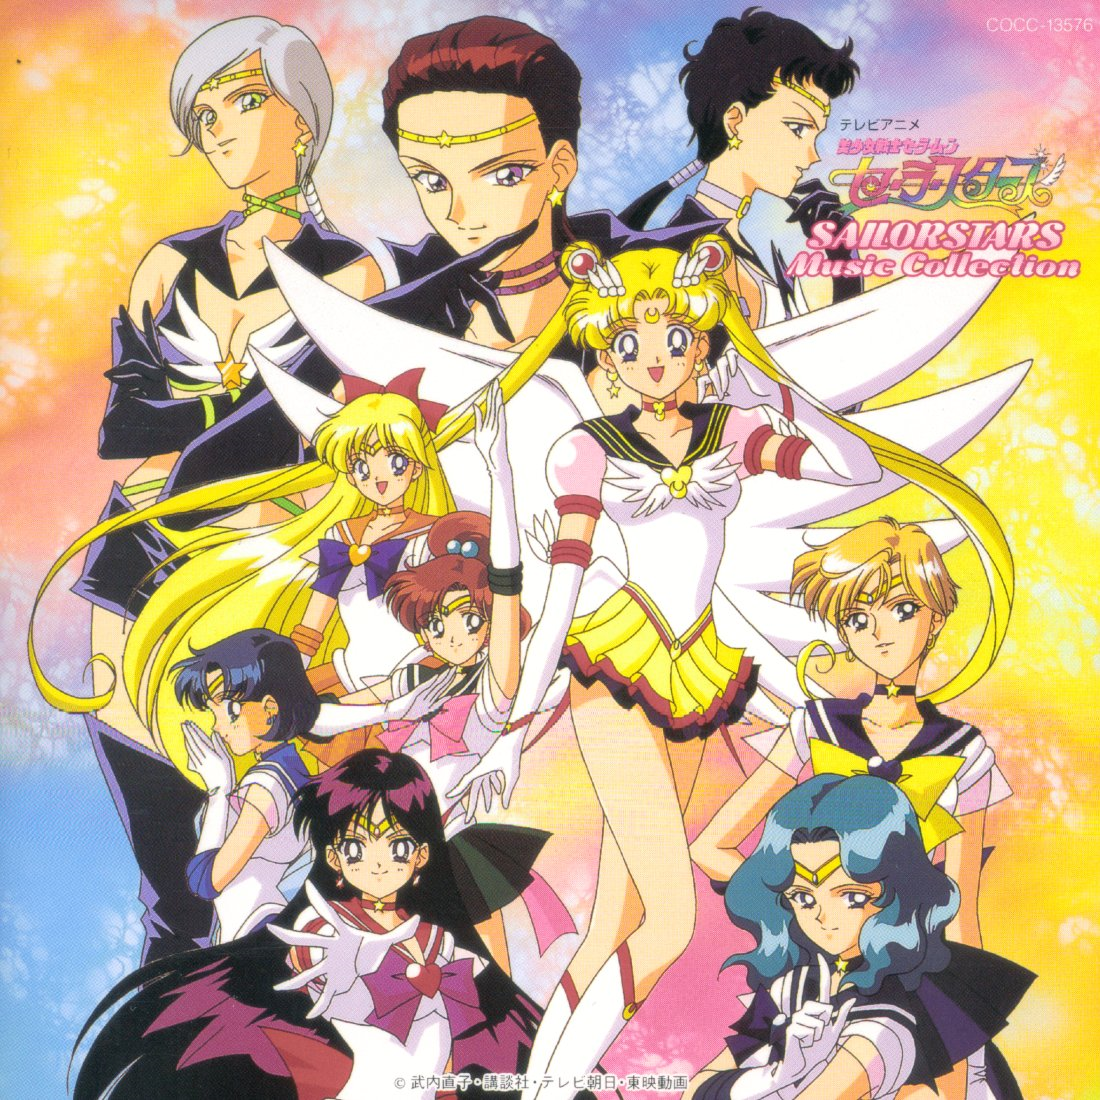 Sailor Moon Crystal: Season III's BD/DVD Art Revealed - Interest